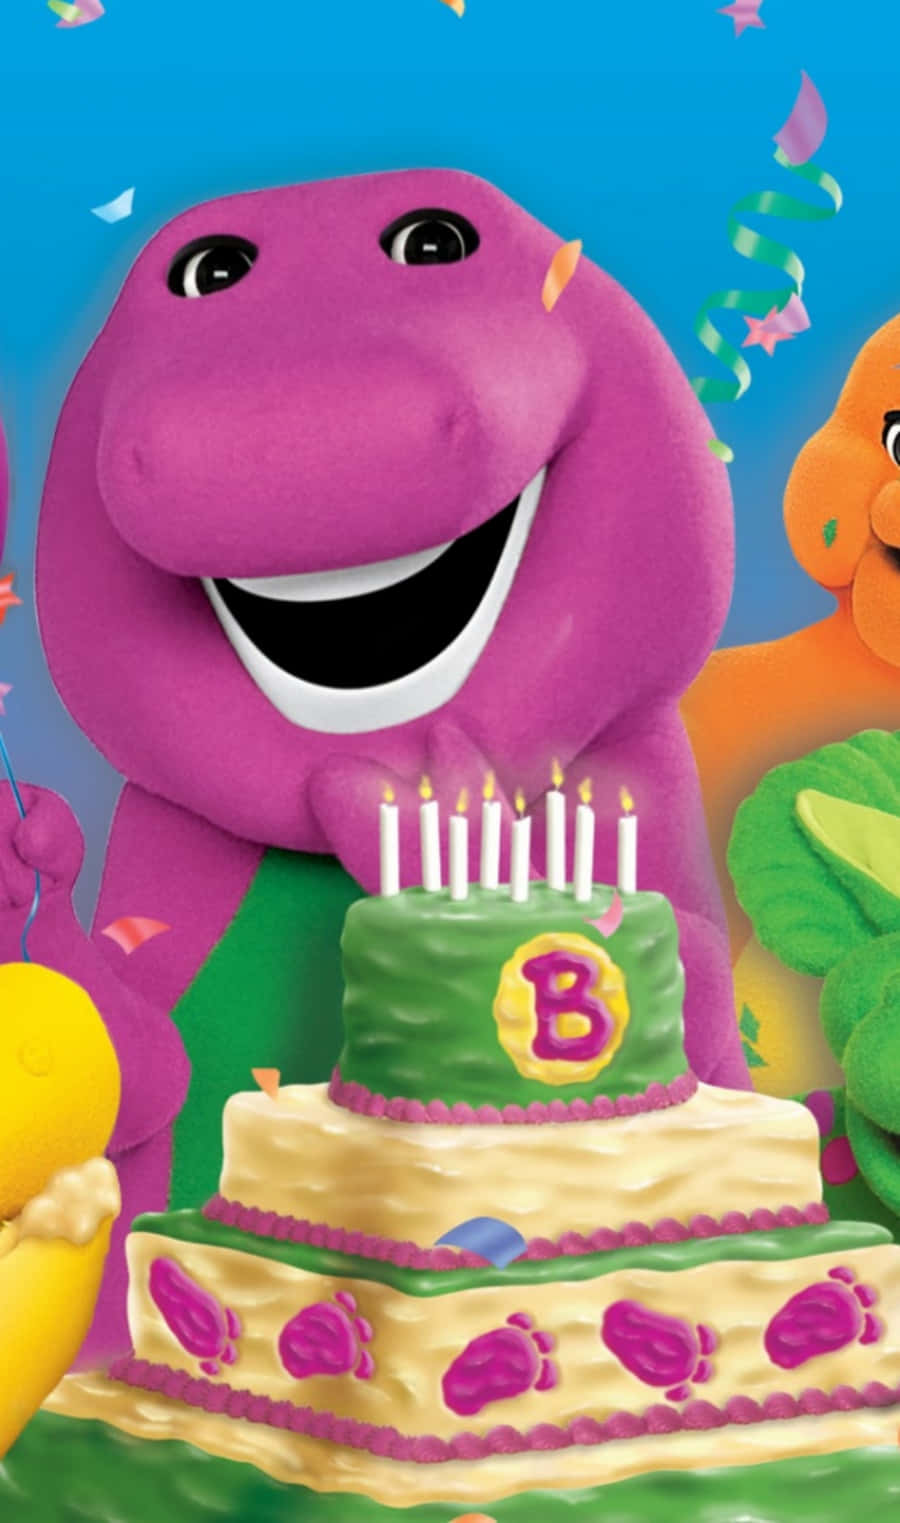 "Barney inspires magic, joy, and happiness"